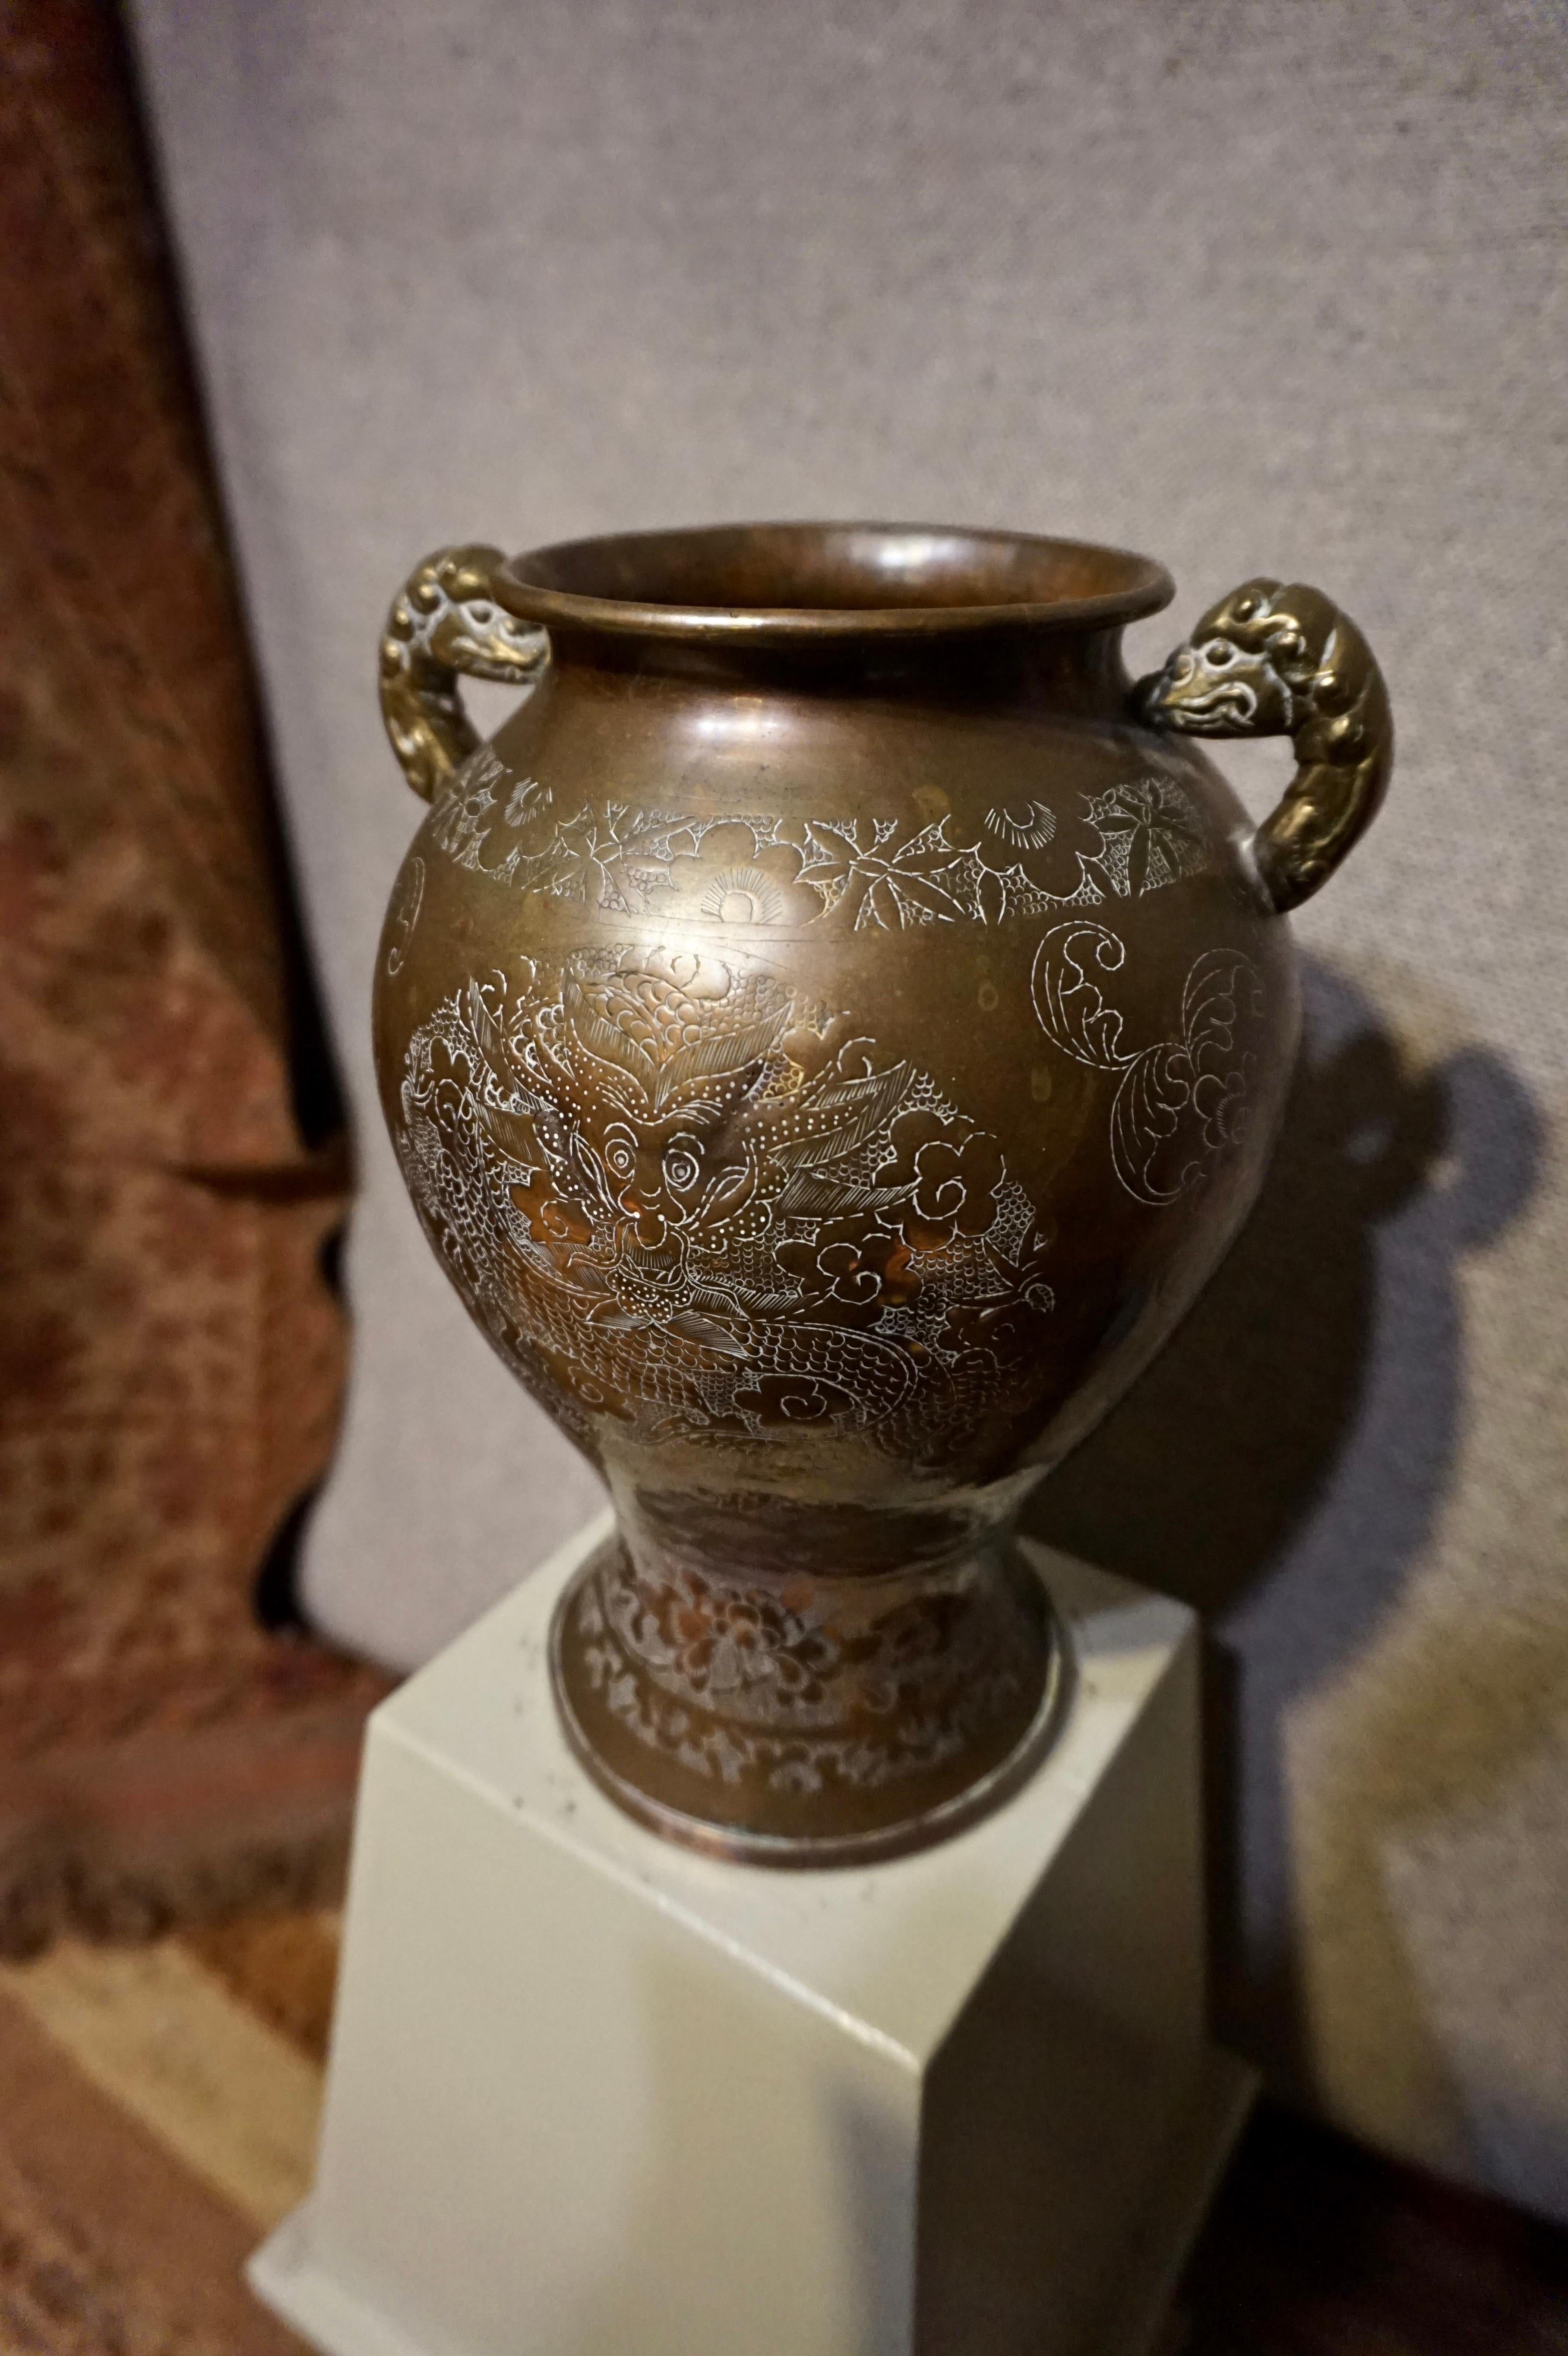 Circa 1900
Auspicious symbolism rendered in fine detail. Original patina and good form with serpentine dragon handles.